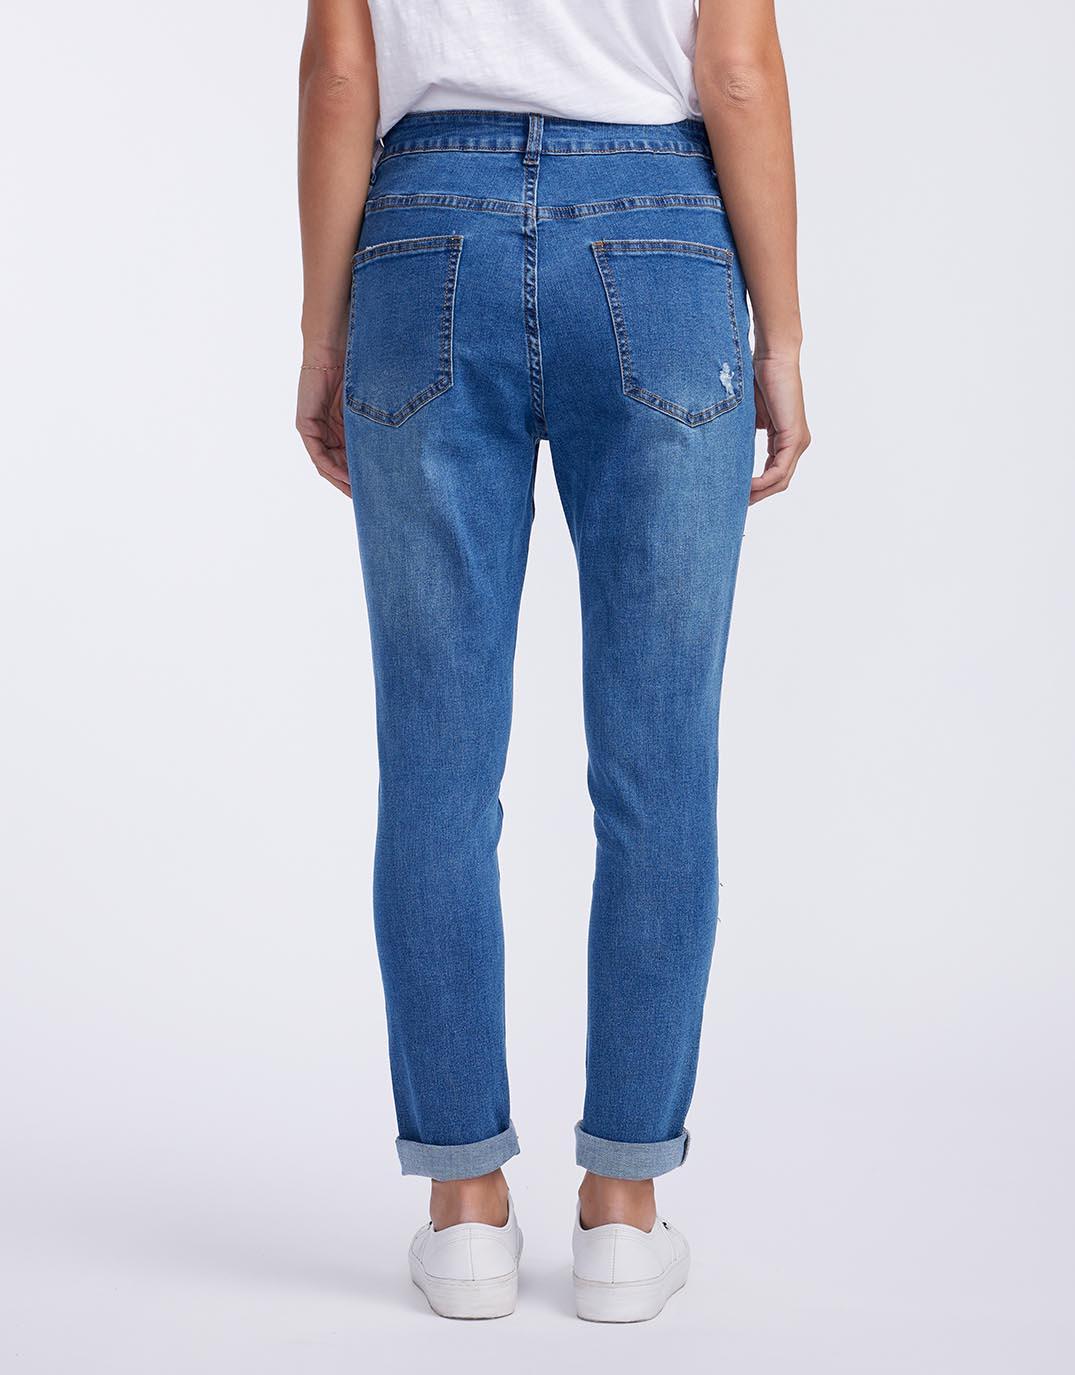 Threadz - Sofia Patch Jeans - Denim - White & Co Living Pants